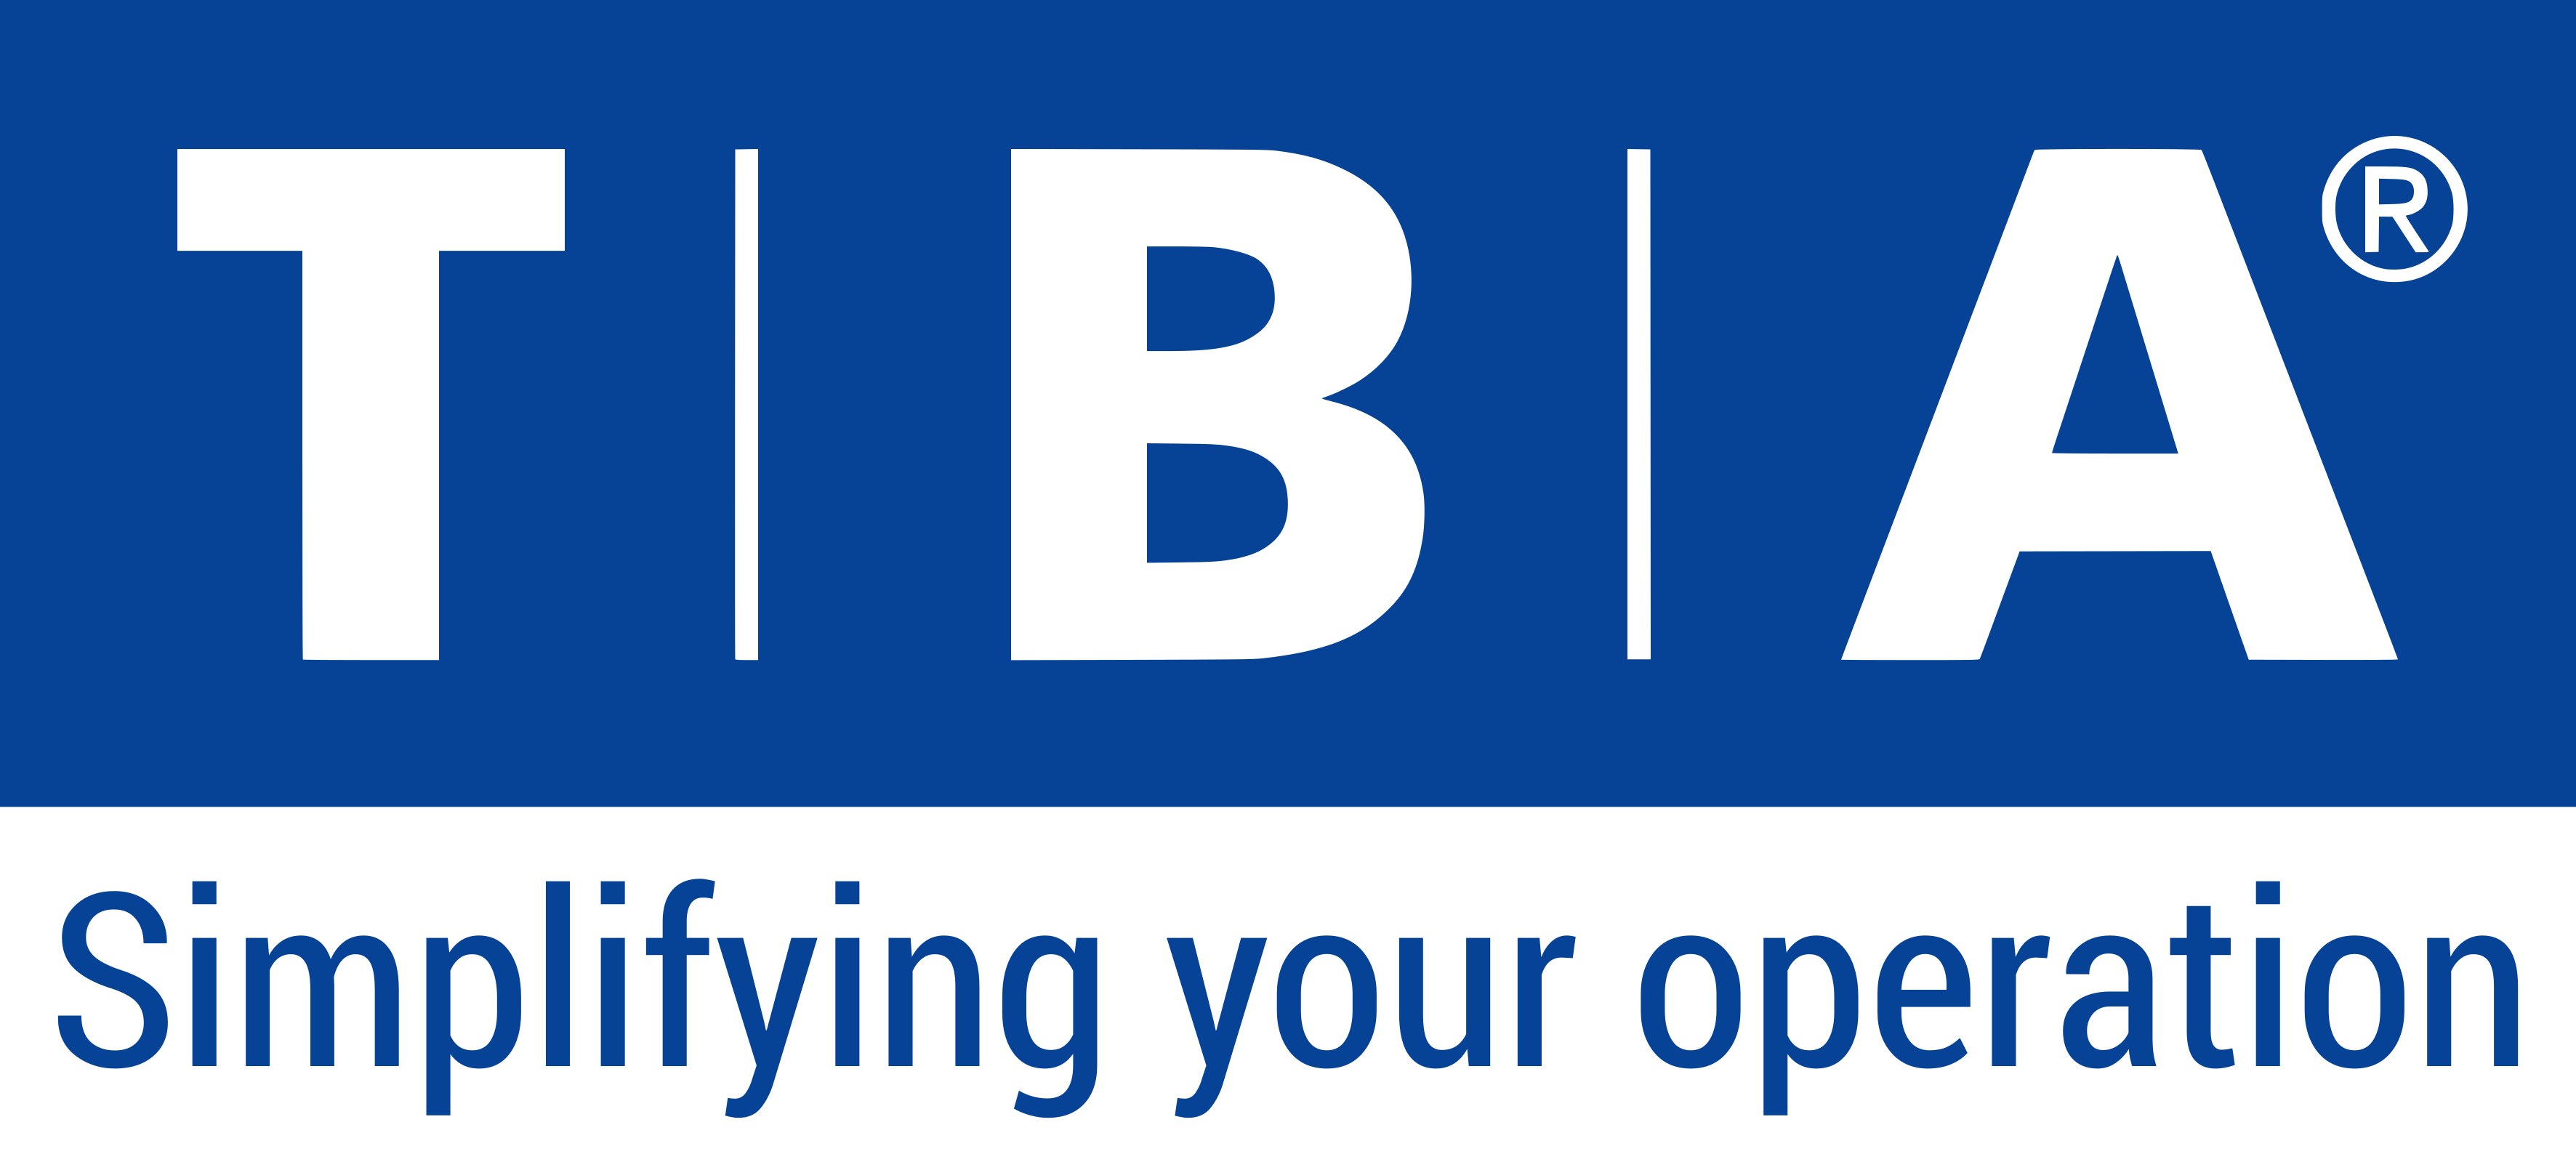 TBA Logo - TBA home page